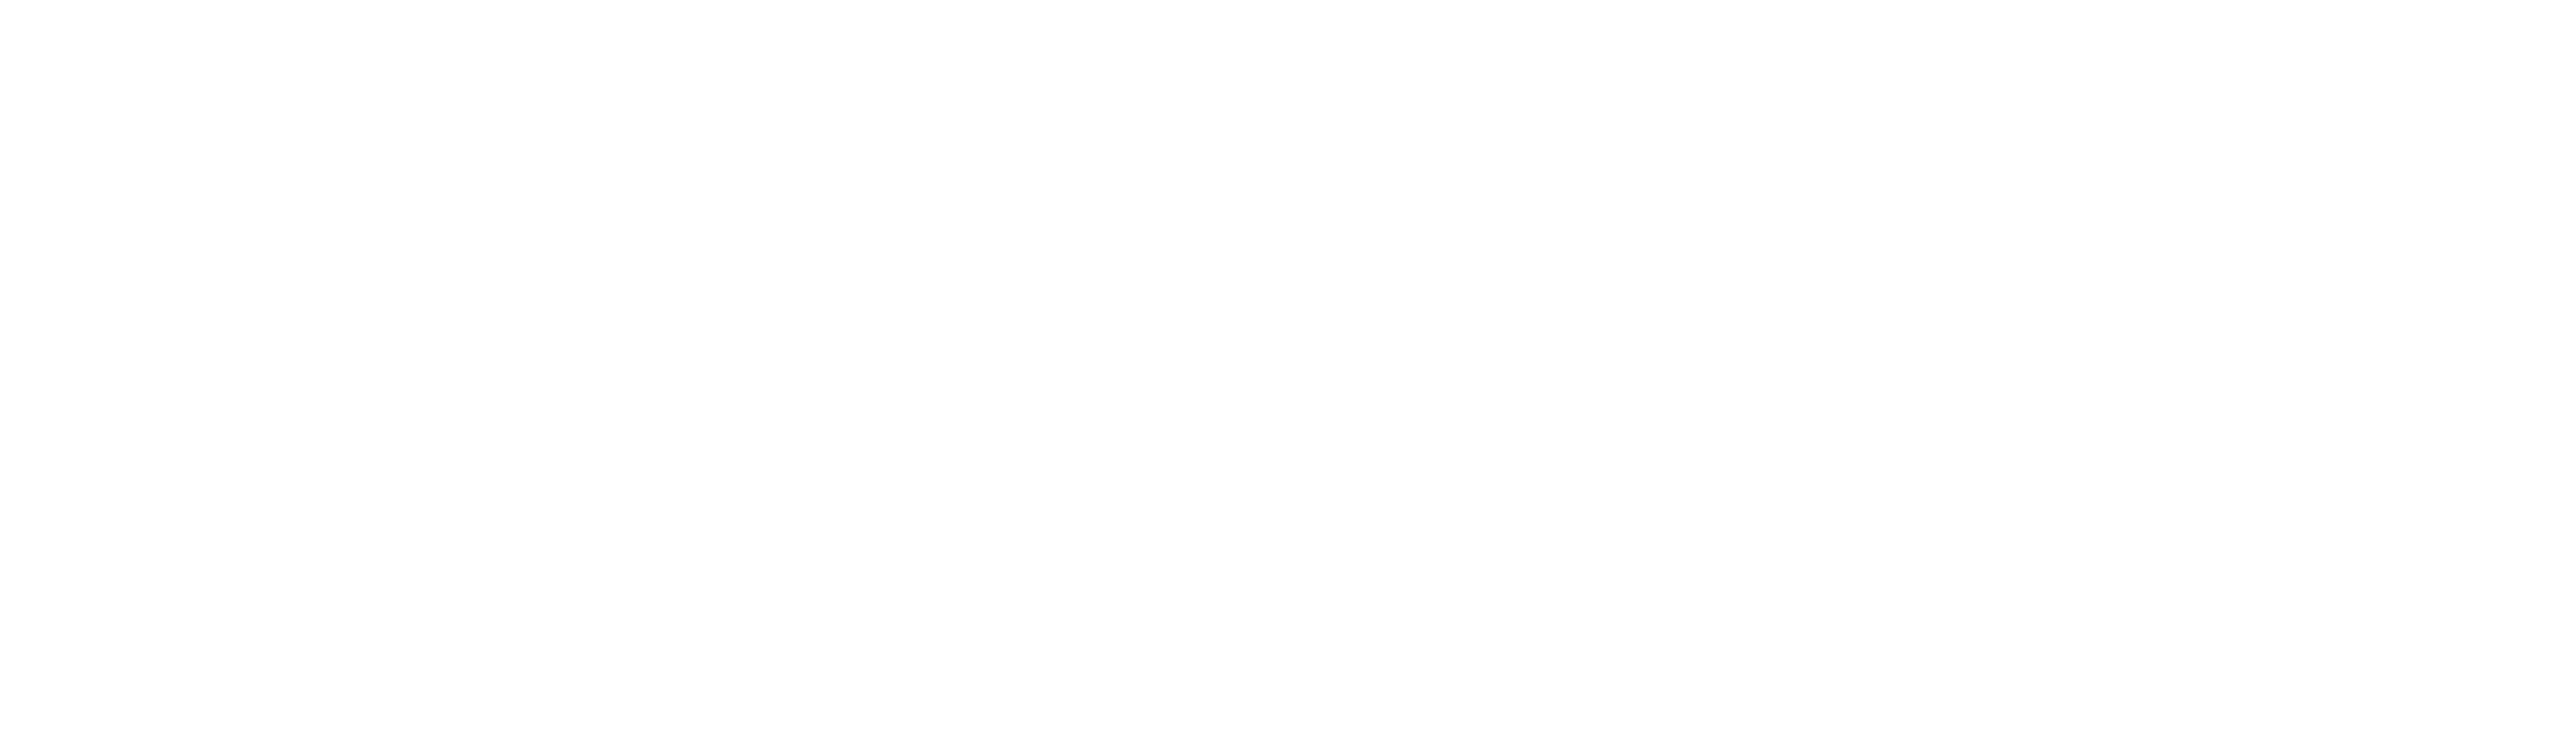 Menopause Works Here logo